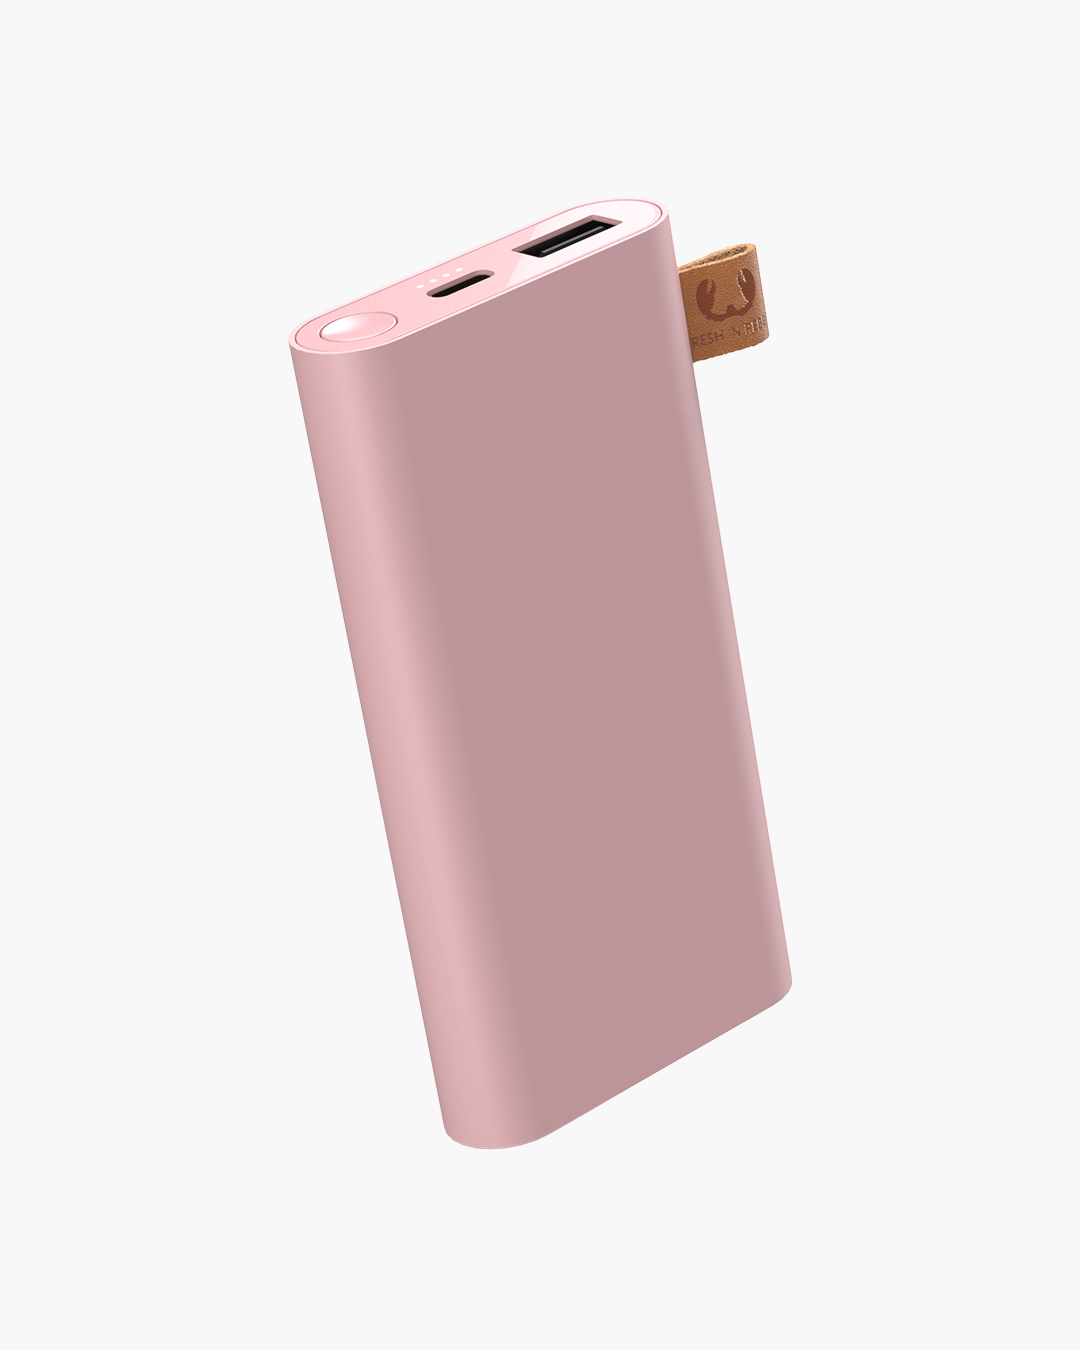 Fresh 'n Rebel - Powerbank 6000 mAh USB-C - Dusty Pink